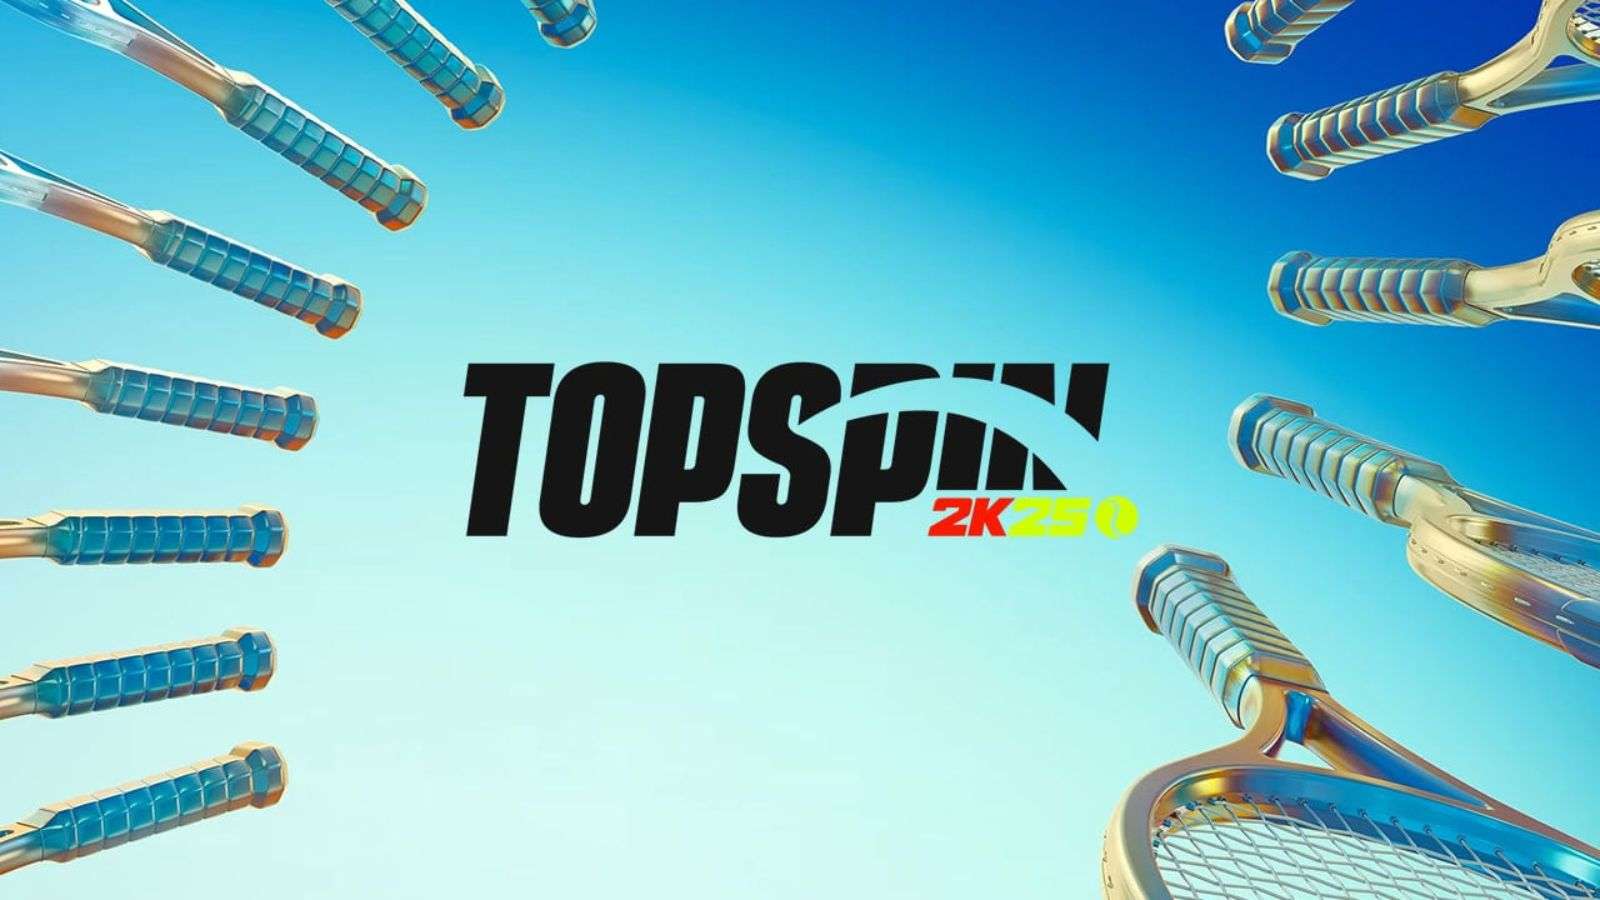 TopSpin 2K25 Nintendo Switch logo